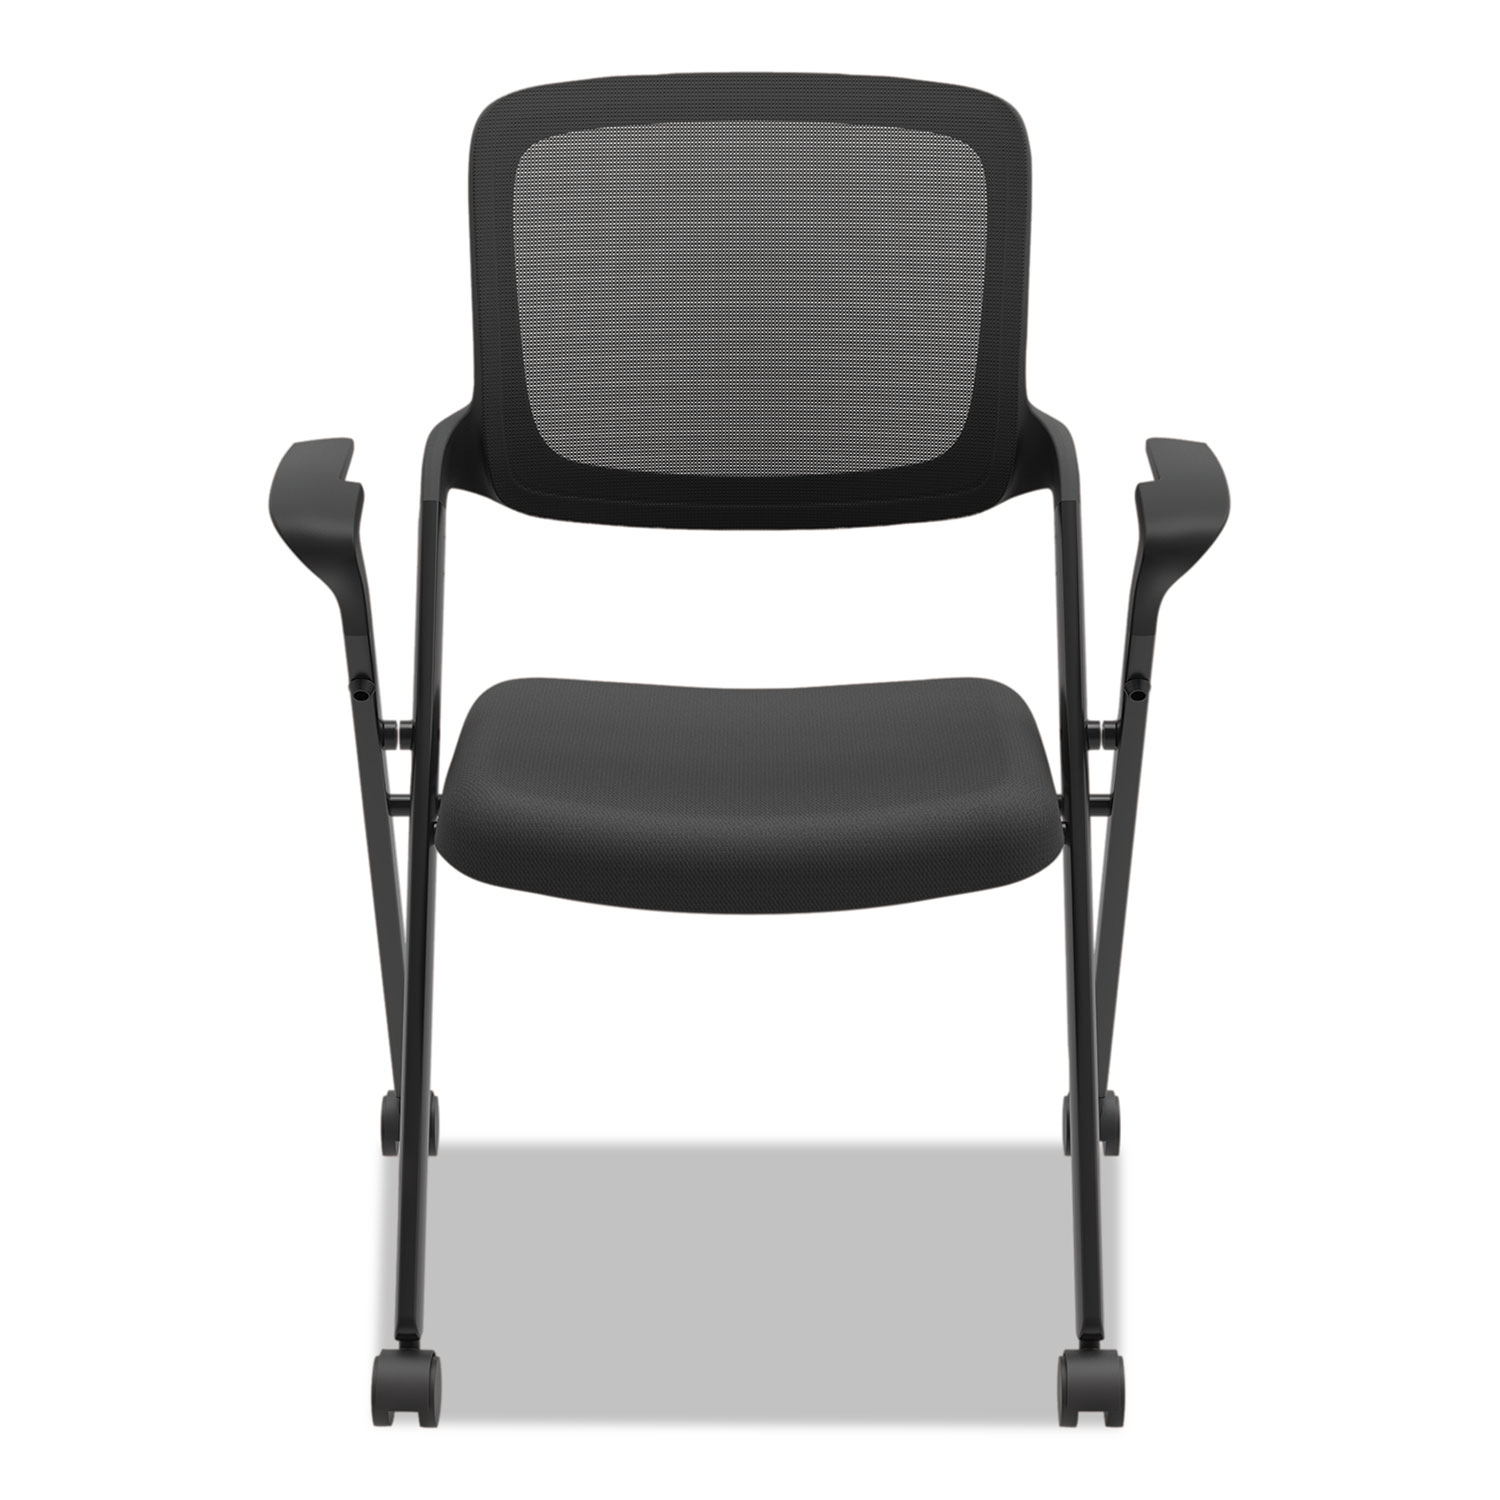 VL314 Mesh Back Nesting Chair, Black Seat/Black Back, Black Base